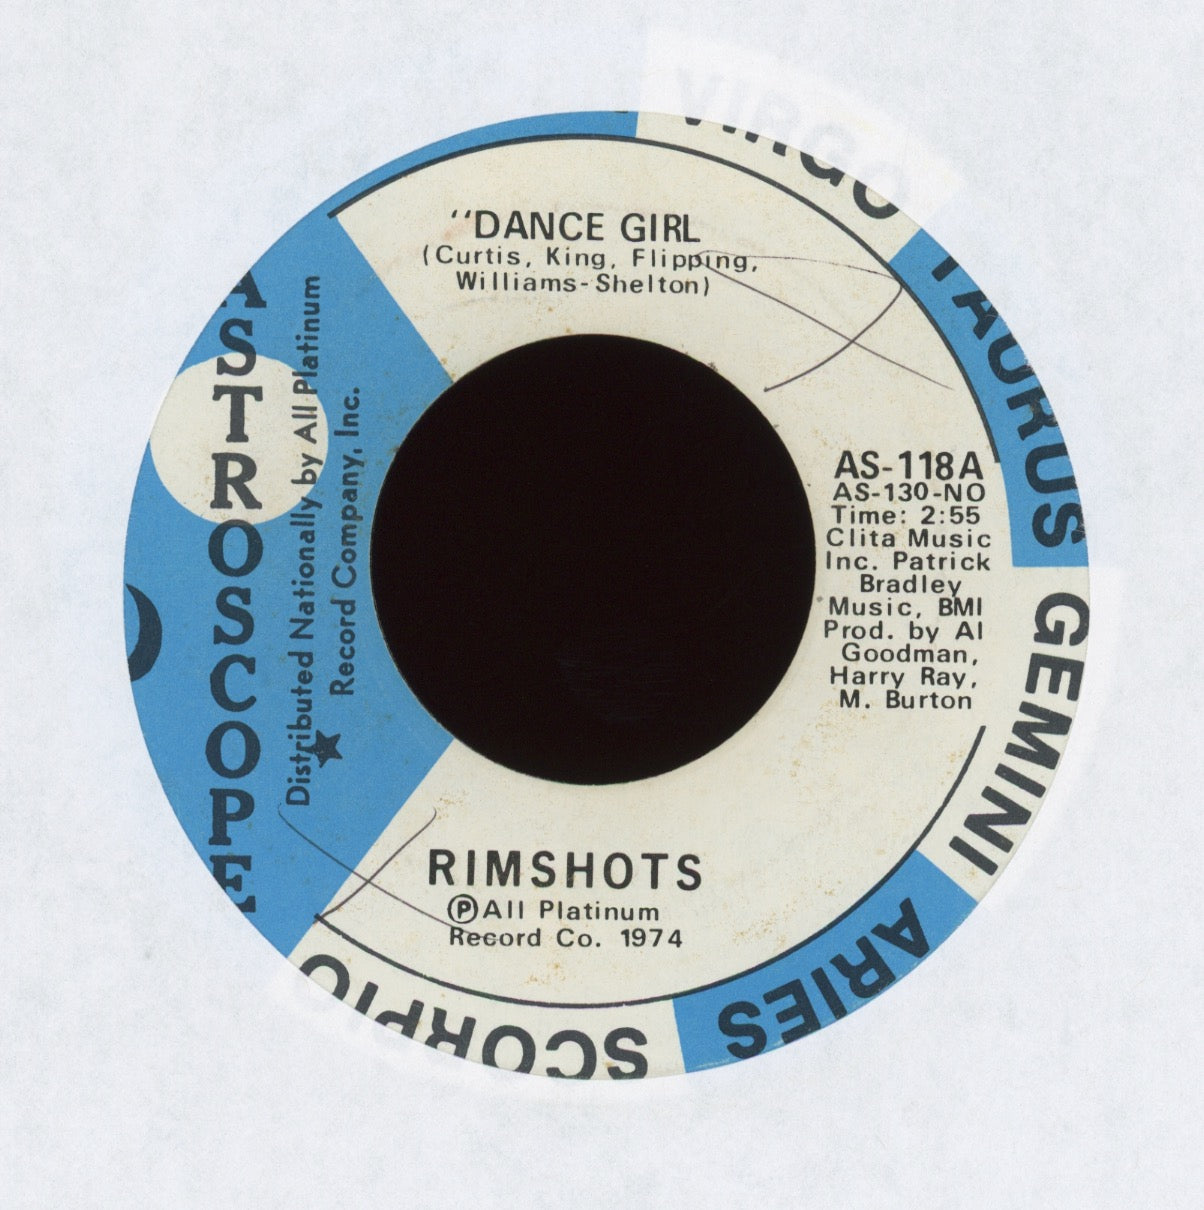 The Rimshots - Dance Girl on Astroscope Funk 45 Breaks